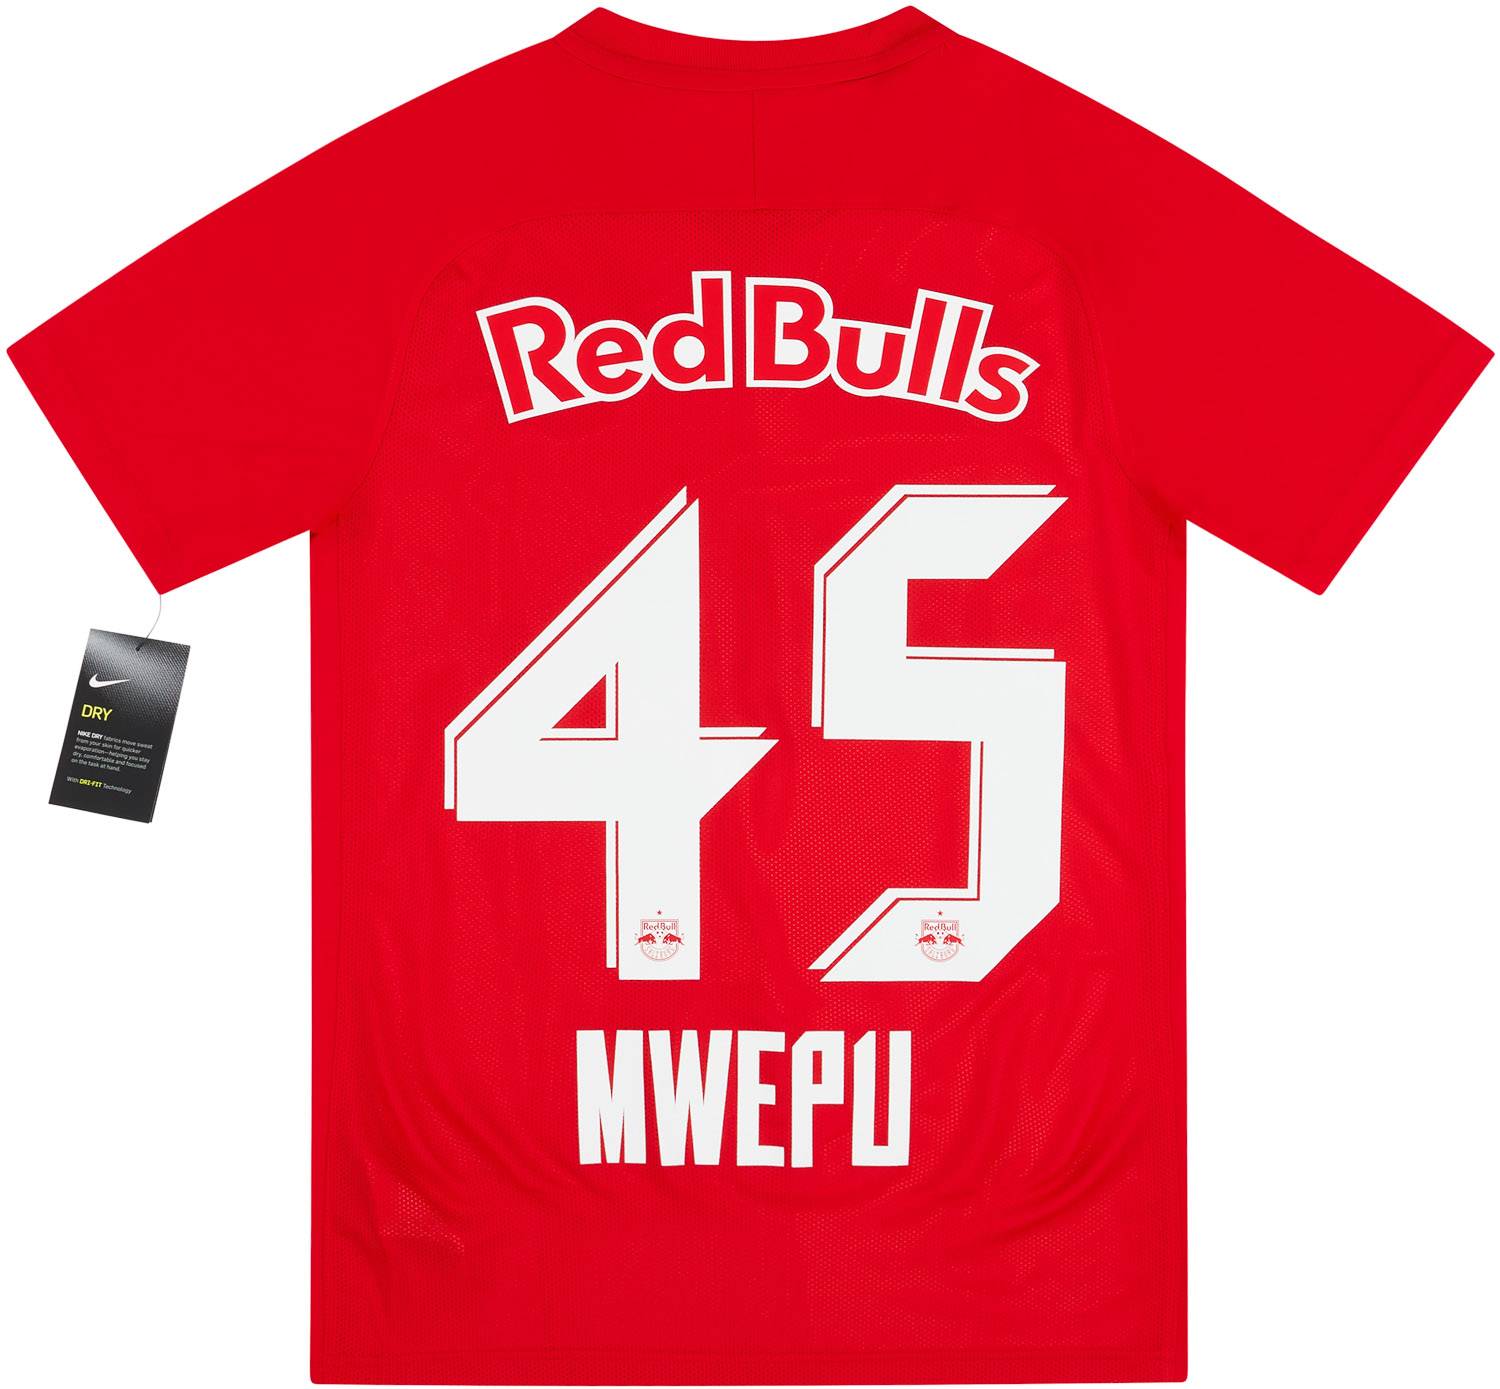 2020-21 Red Bull Salzburg Home Shirt Mwepu #45